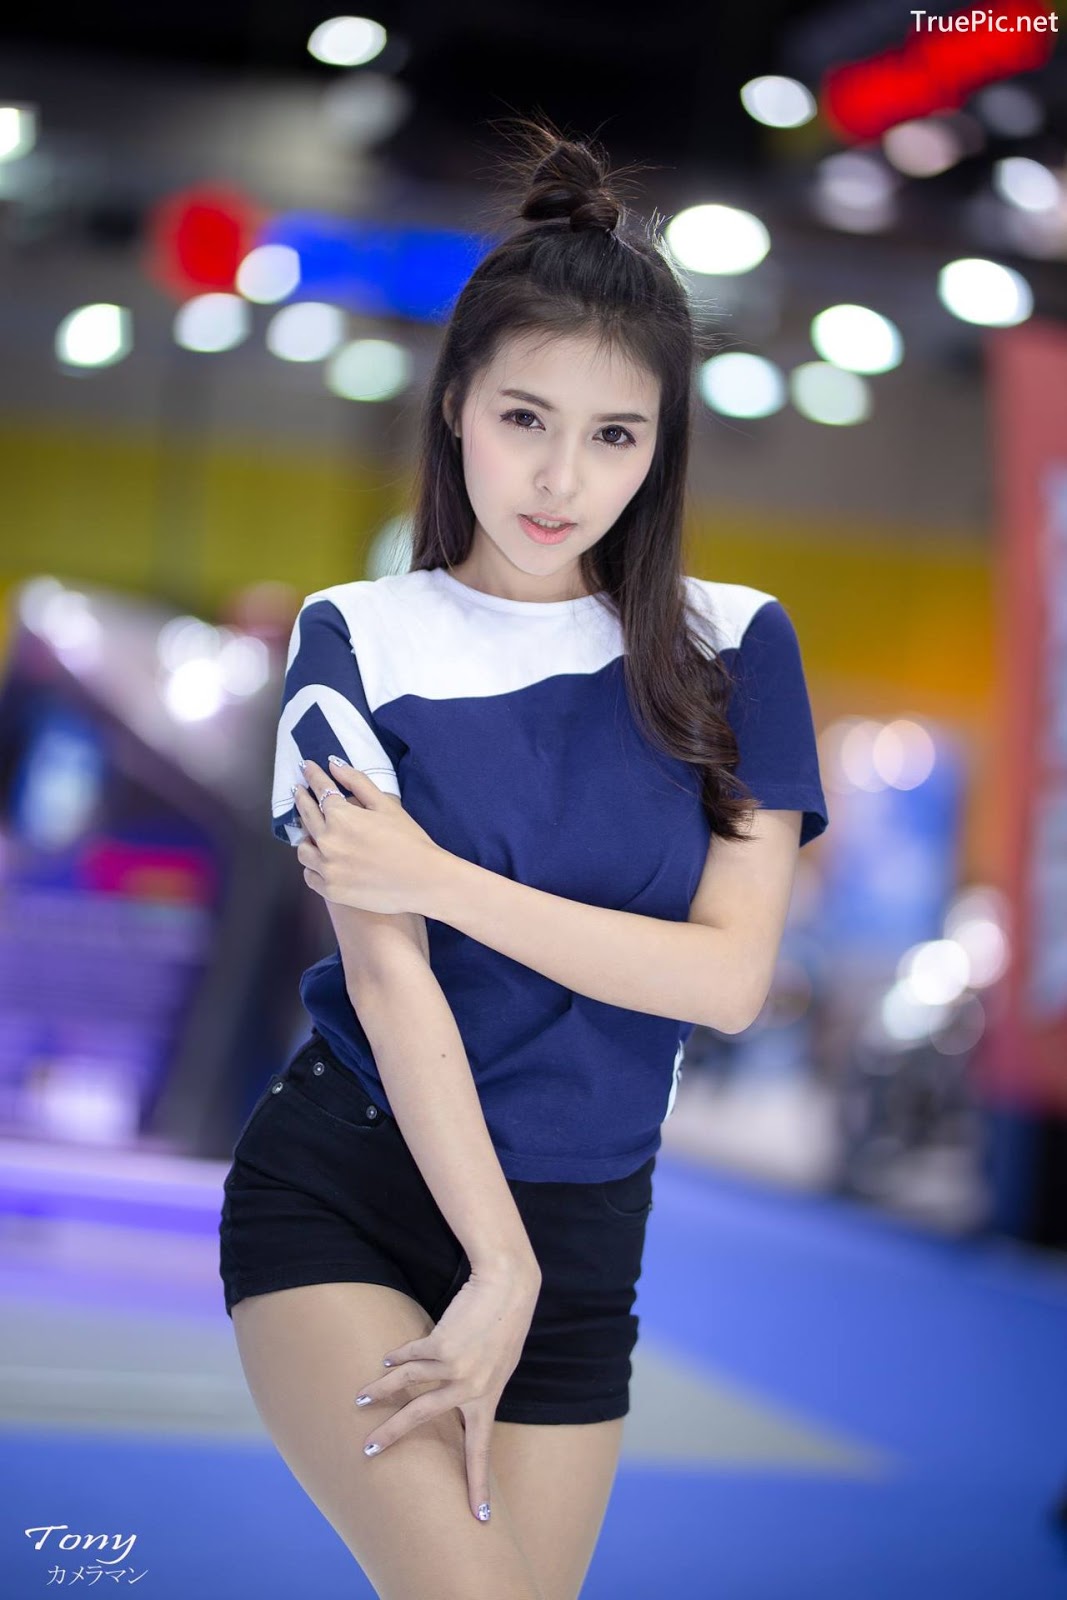 Image-Thailand-Hot-Model-Thai-Racing-Girl-At-Big-Motor-2018-TruePic.net- Picture-89